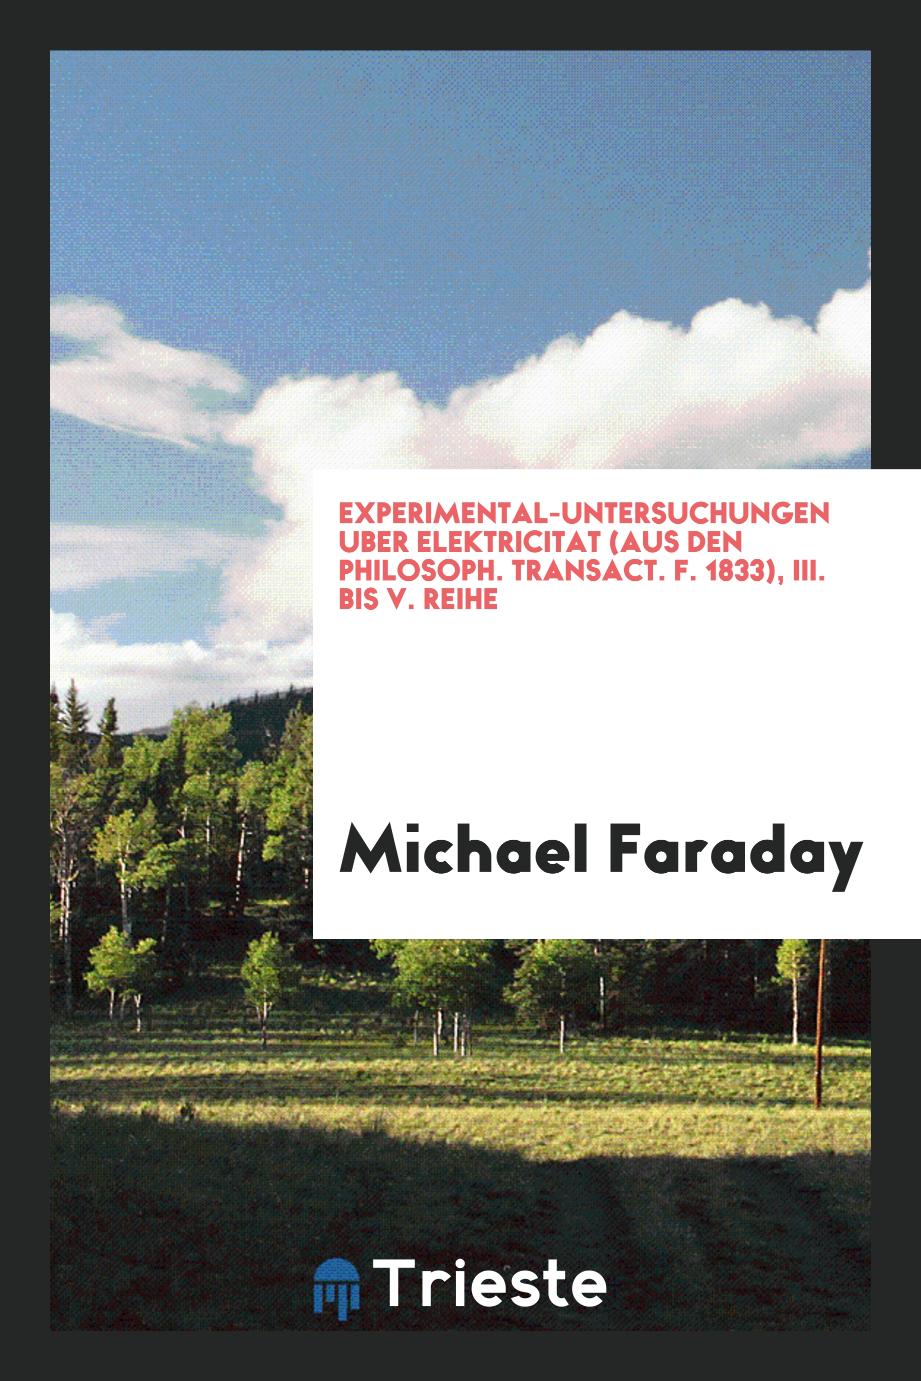 Michael Faraday - Experimental-Untersuchungen uber Elektricitat (aus den Philosoph. Transact. f. 1833), III. bis V. Reihe